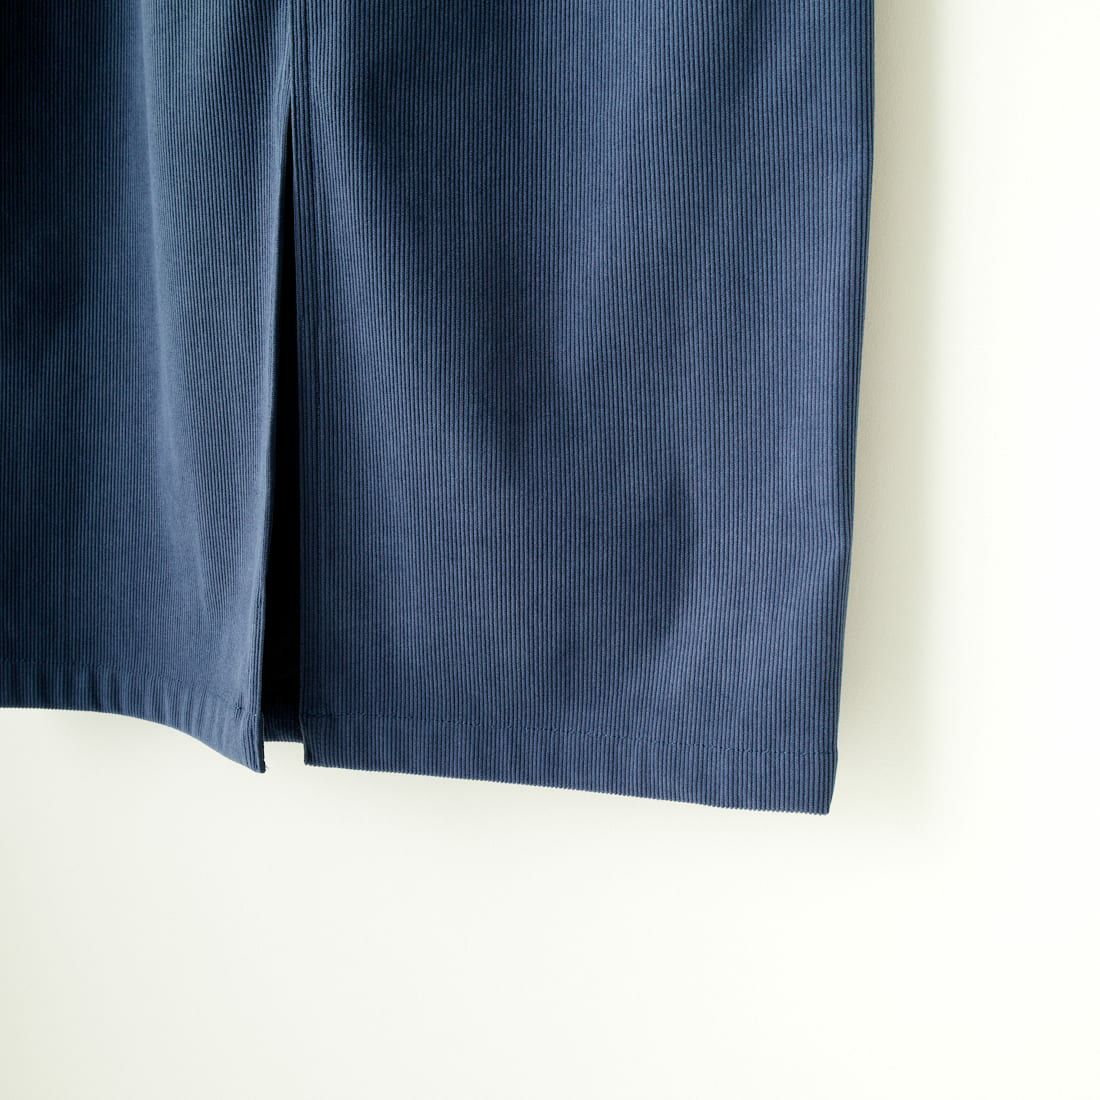 Jeans Factory Clothes [ジーンズファクトリークローズ] コーデュロイベイカースカート [IWJF-02] BLUE